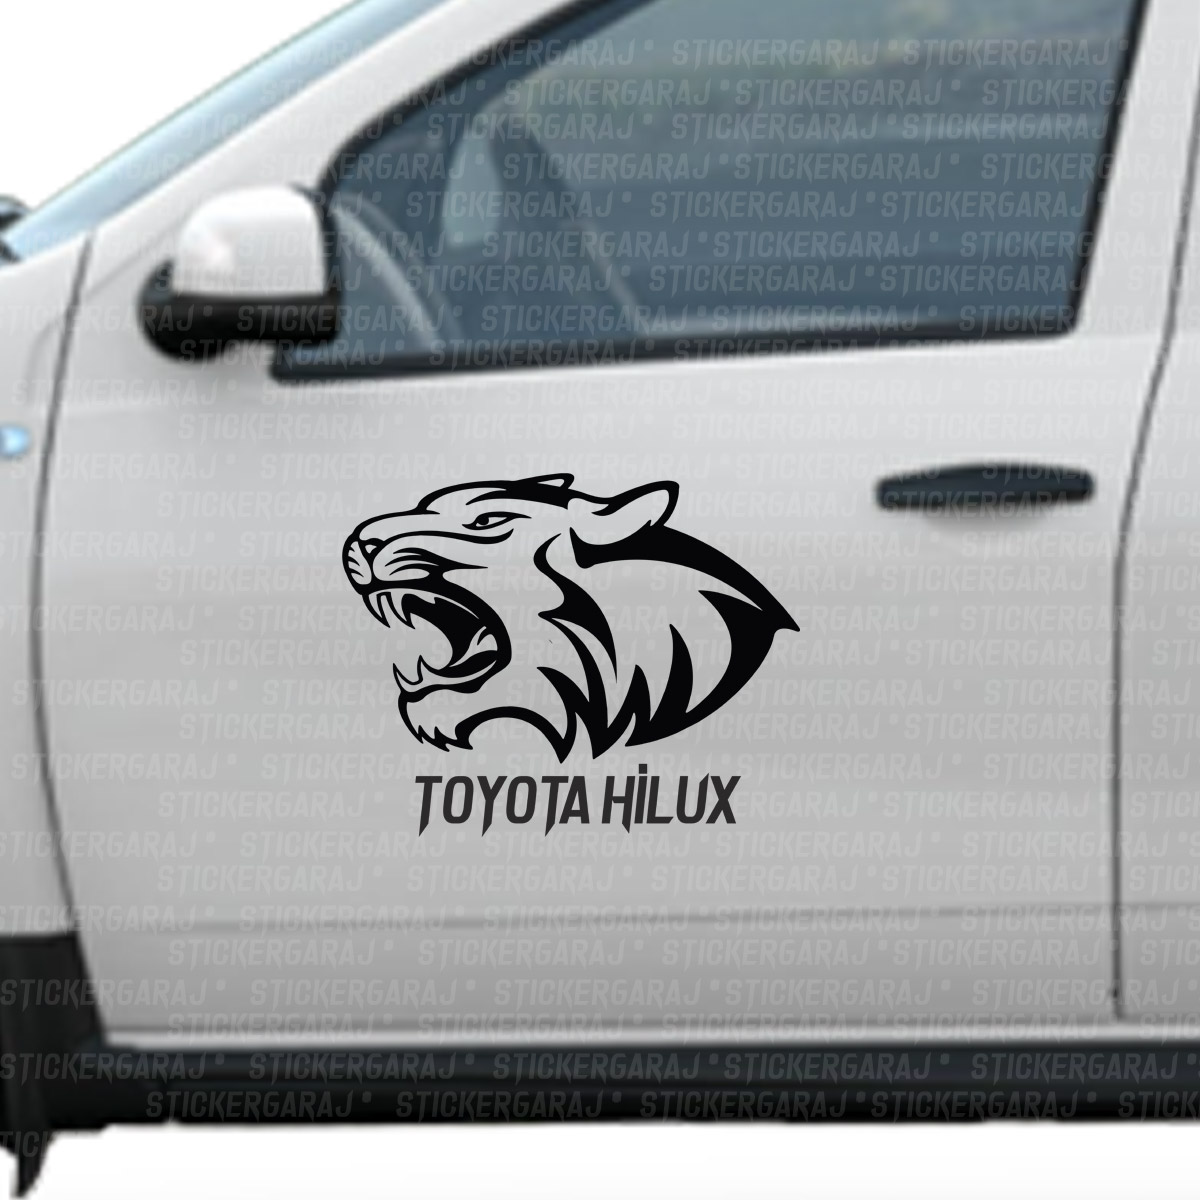 Toyota Hilux sticker - Toyota Hilux Off Road sticker